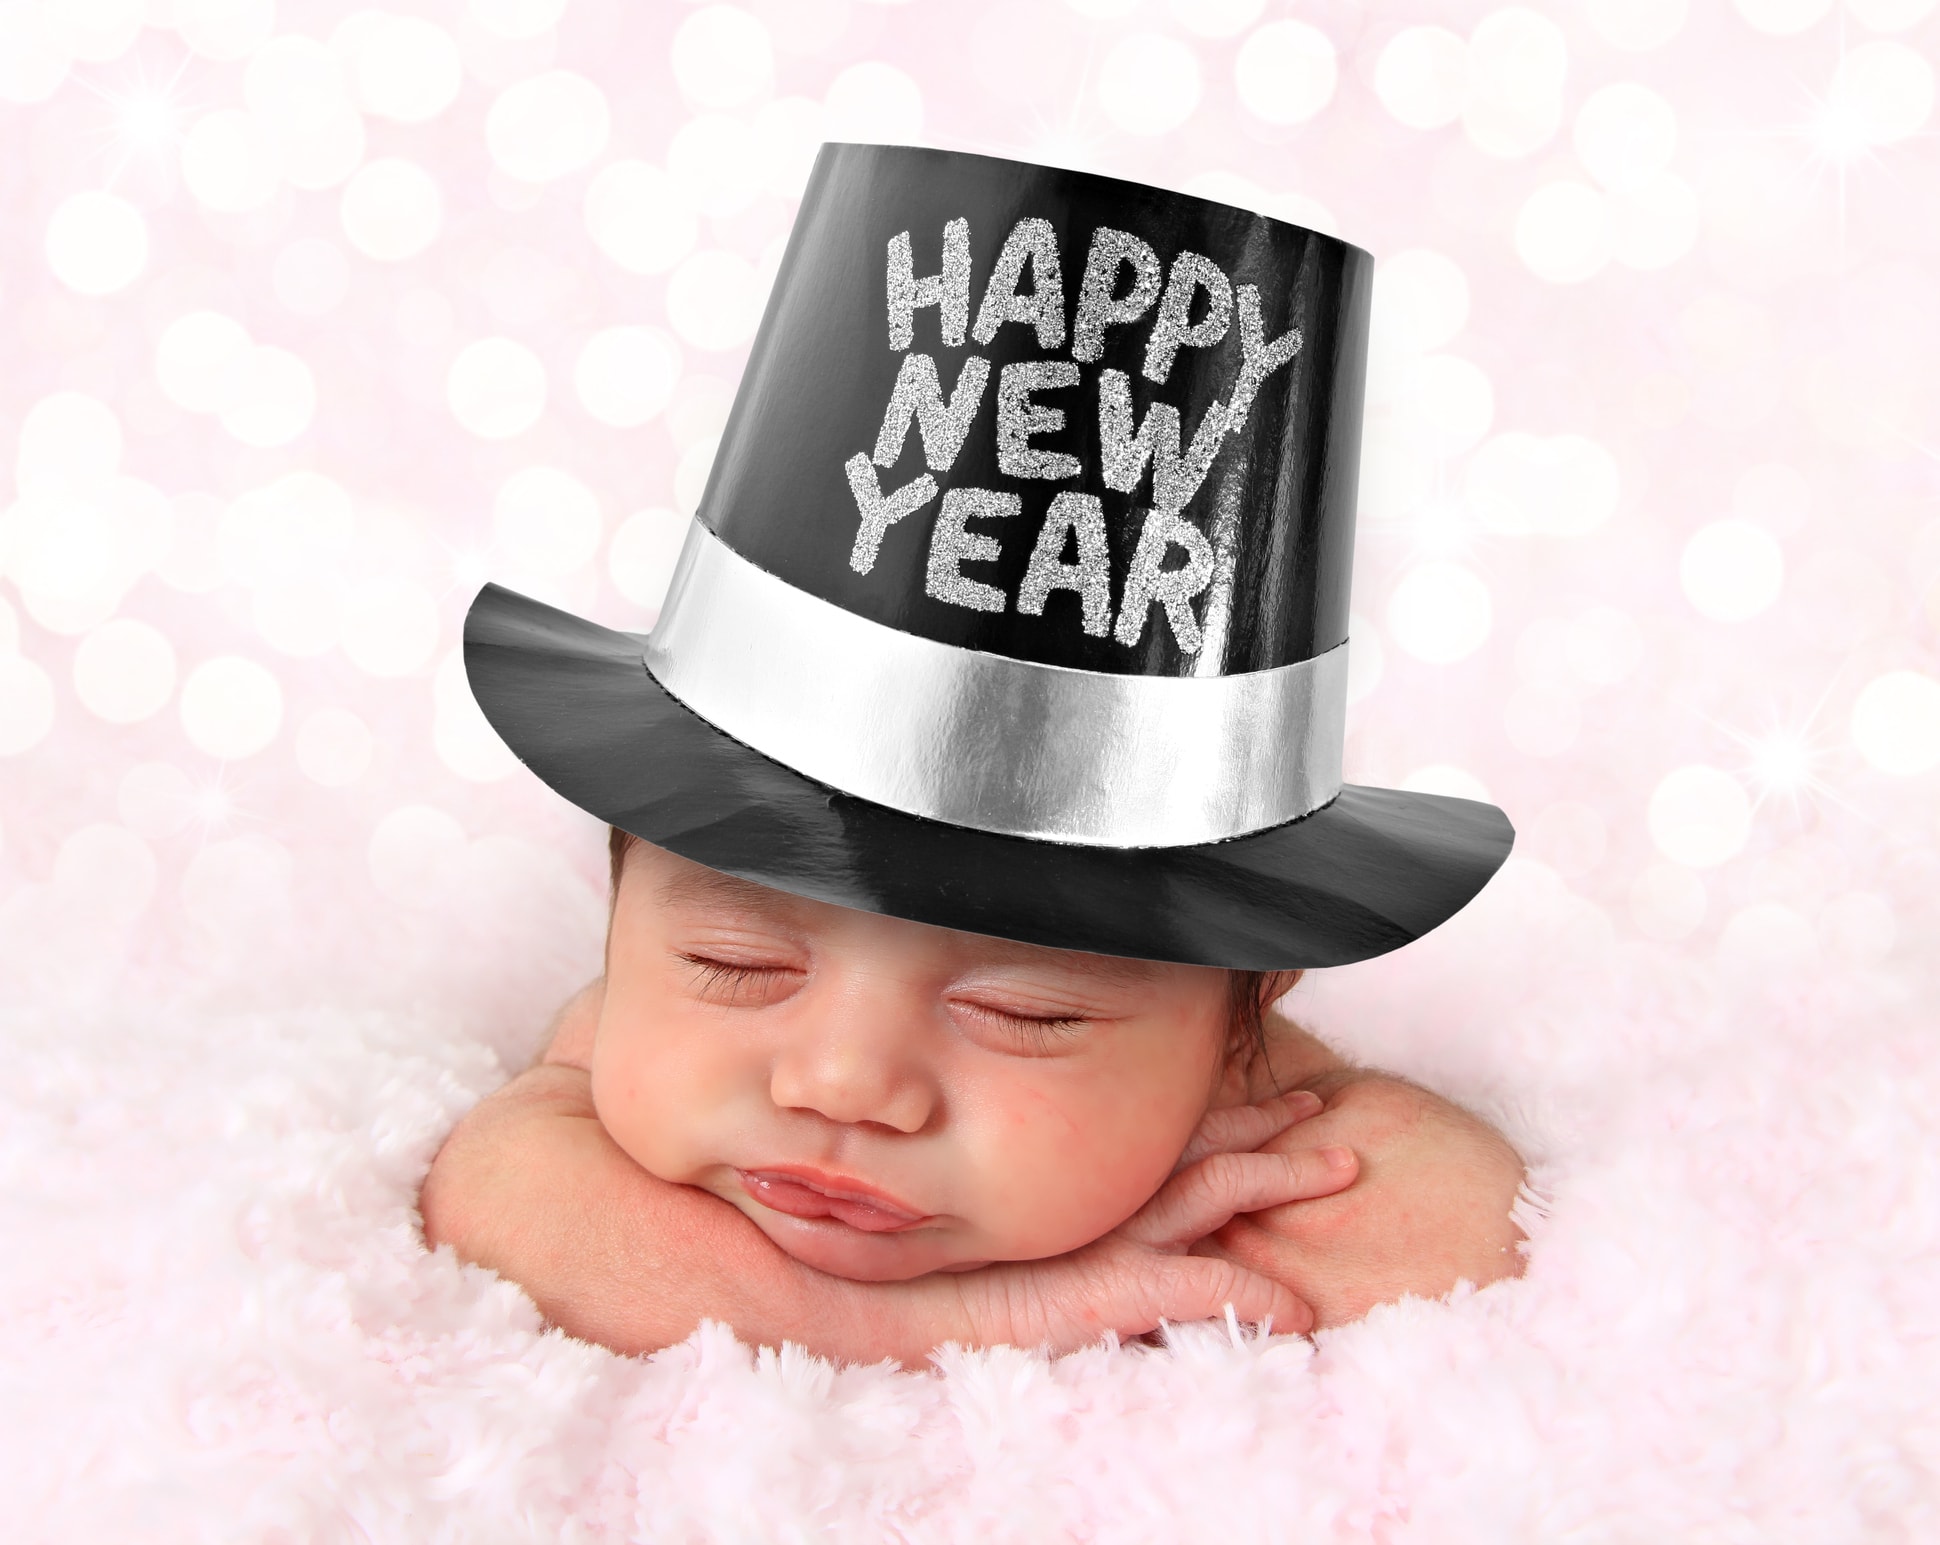 Newborn baby girl wearing a Happy New Year hat.